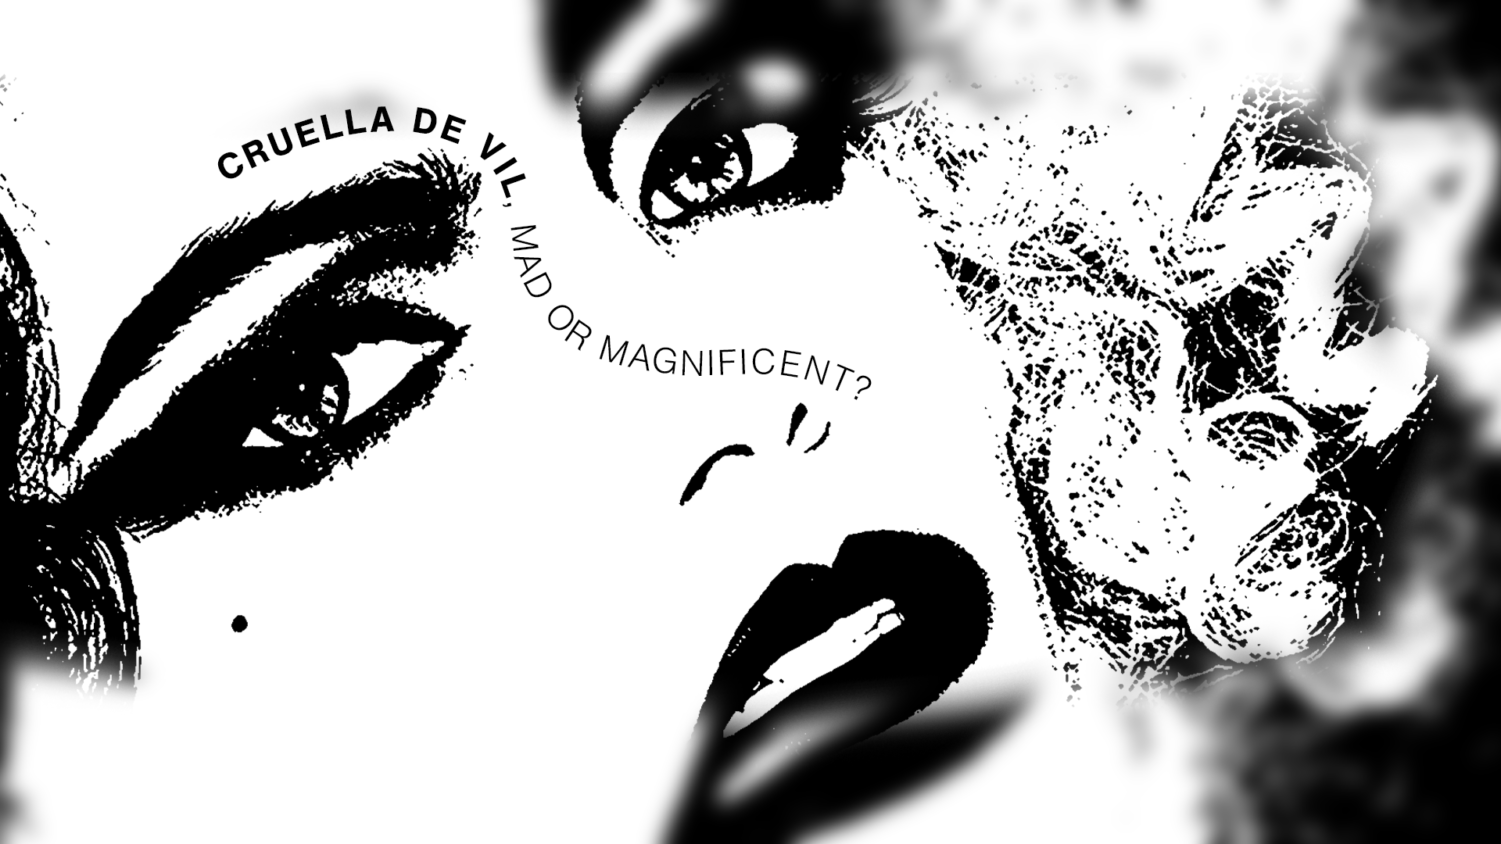 How Vivienne Westwood designs inspired 'Cruella' movie - Los Angeles Times